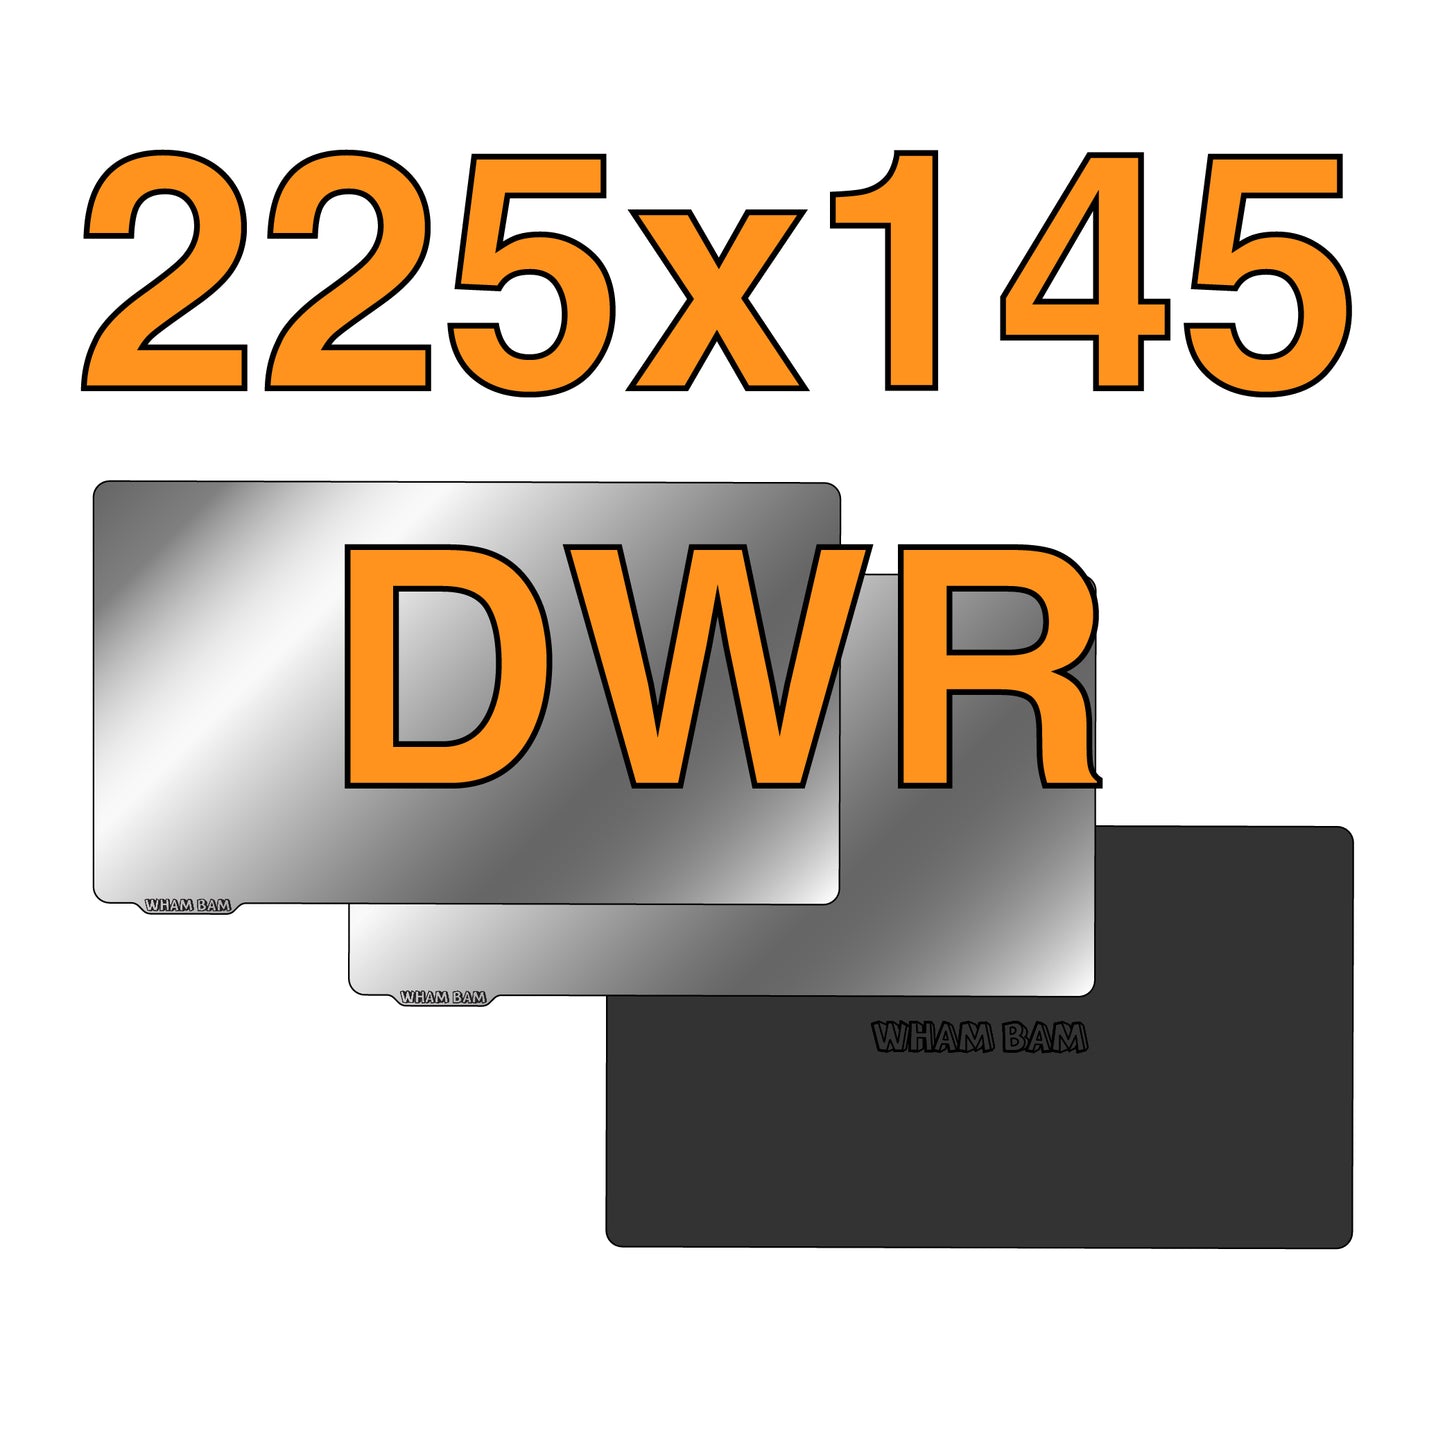 225 x 145 - EPAX X10, X10 8.9, X10 10.1" 2K color, X10 8.9 4K Mono, DX10